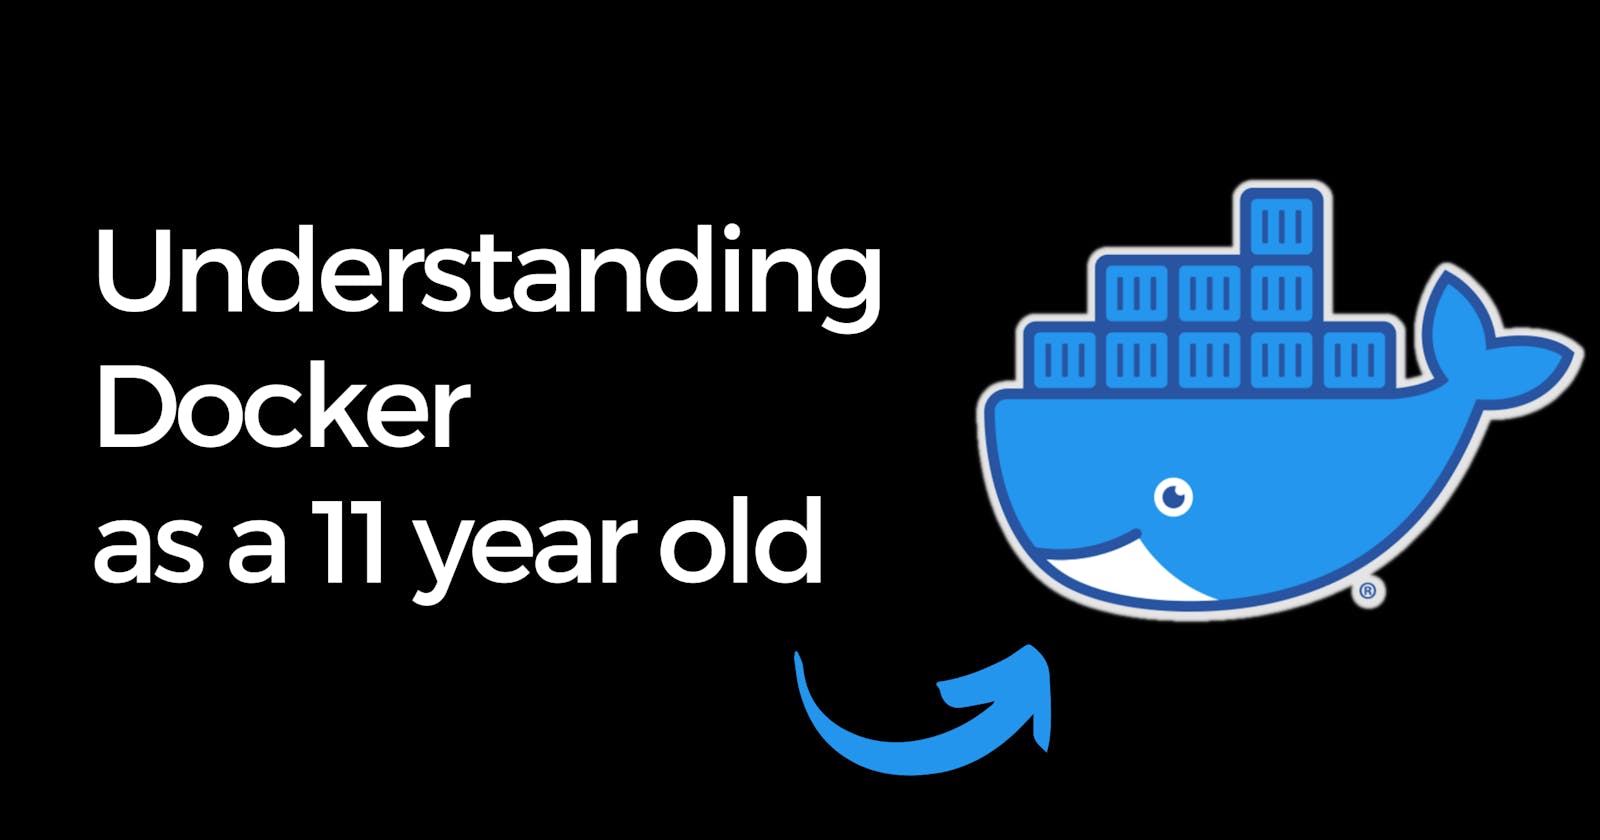 Understanding Docker - as an 11 year old